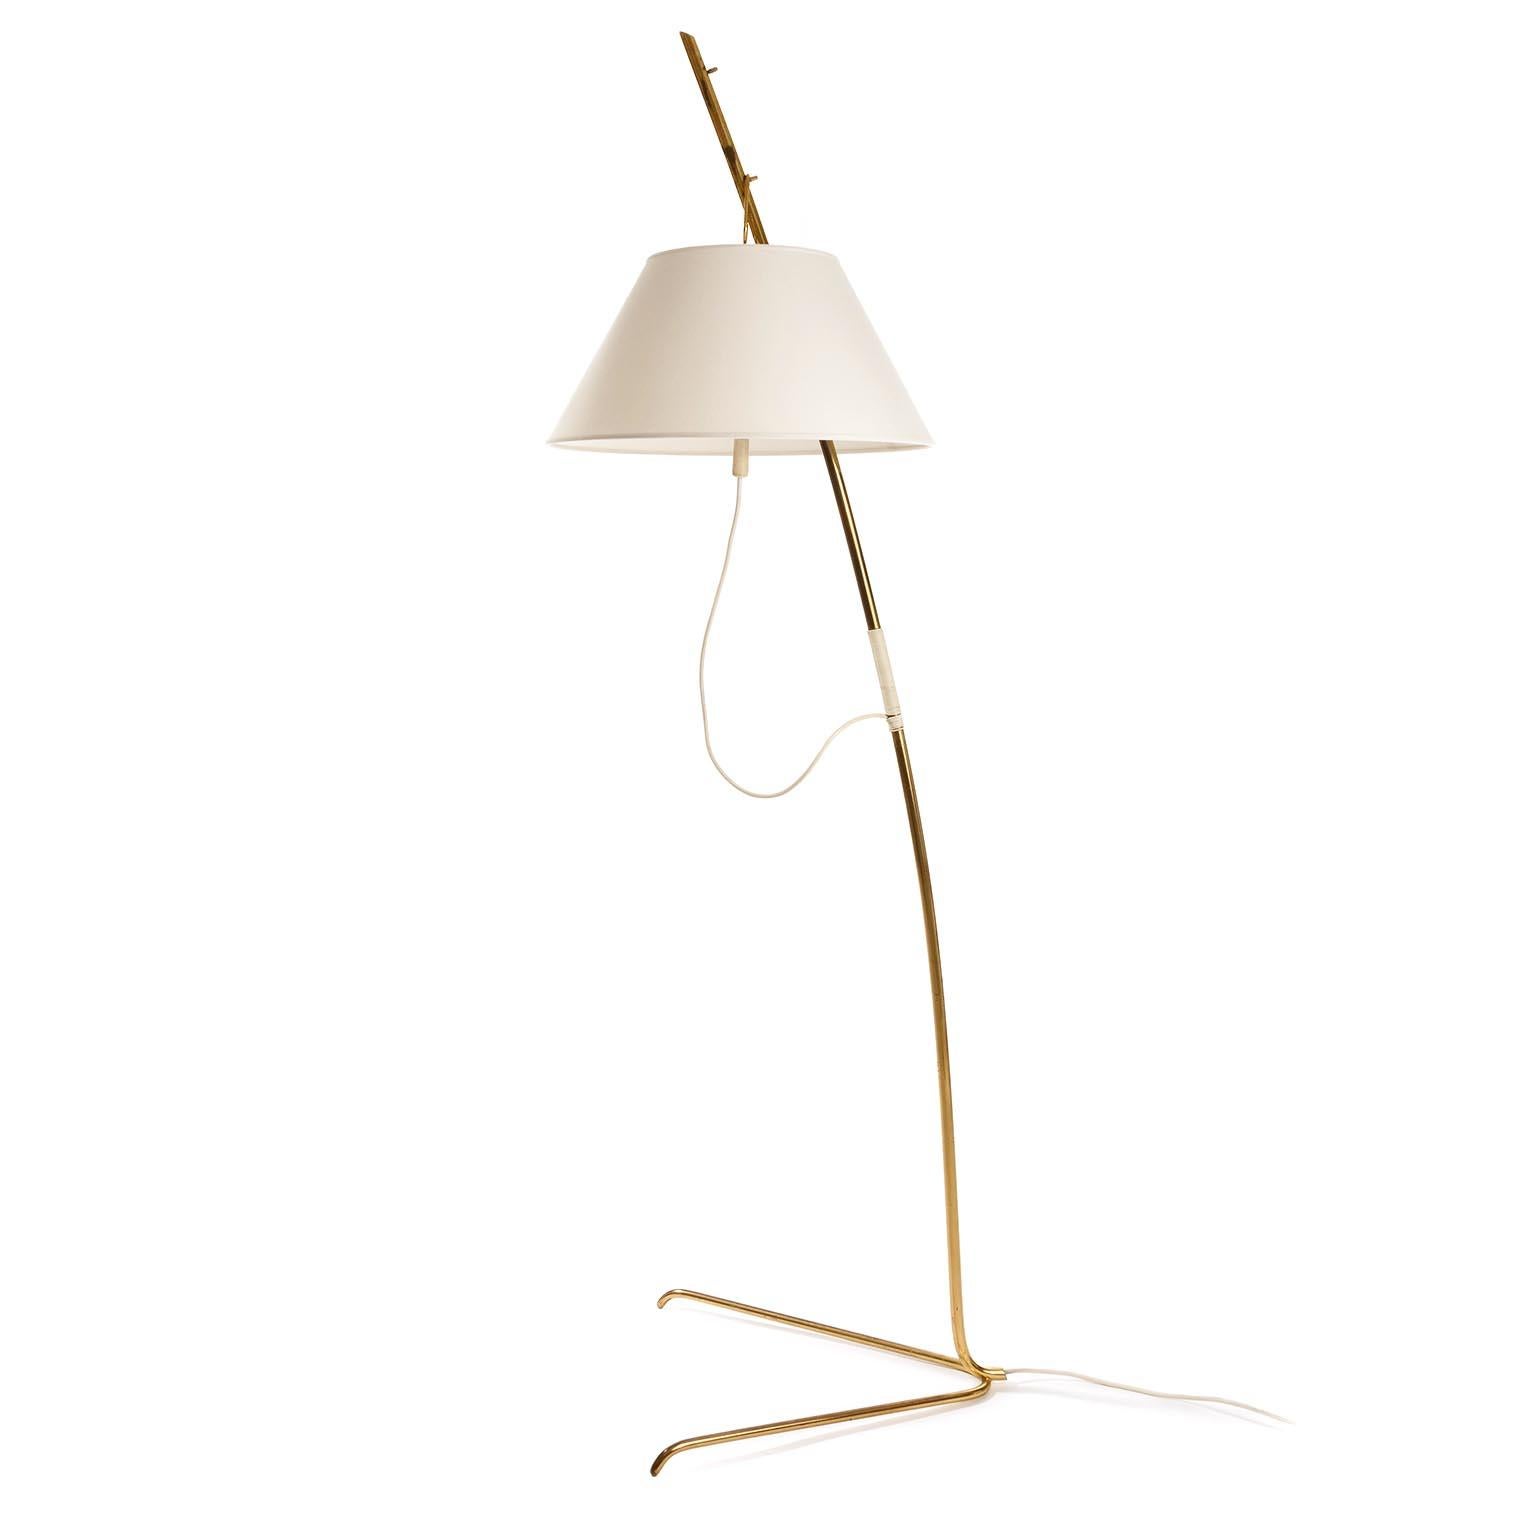 Austrian One of Two Height Adjustable Kalmar Brass Floor Lamps 'Cavador' No. 2098, 1960 For Sale